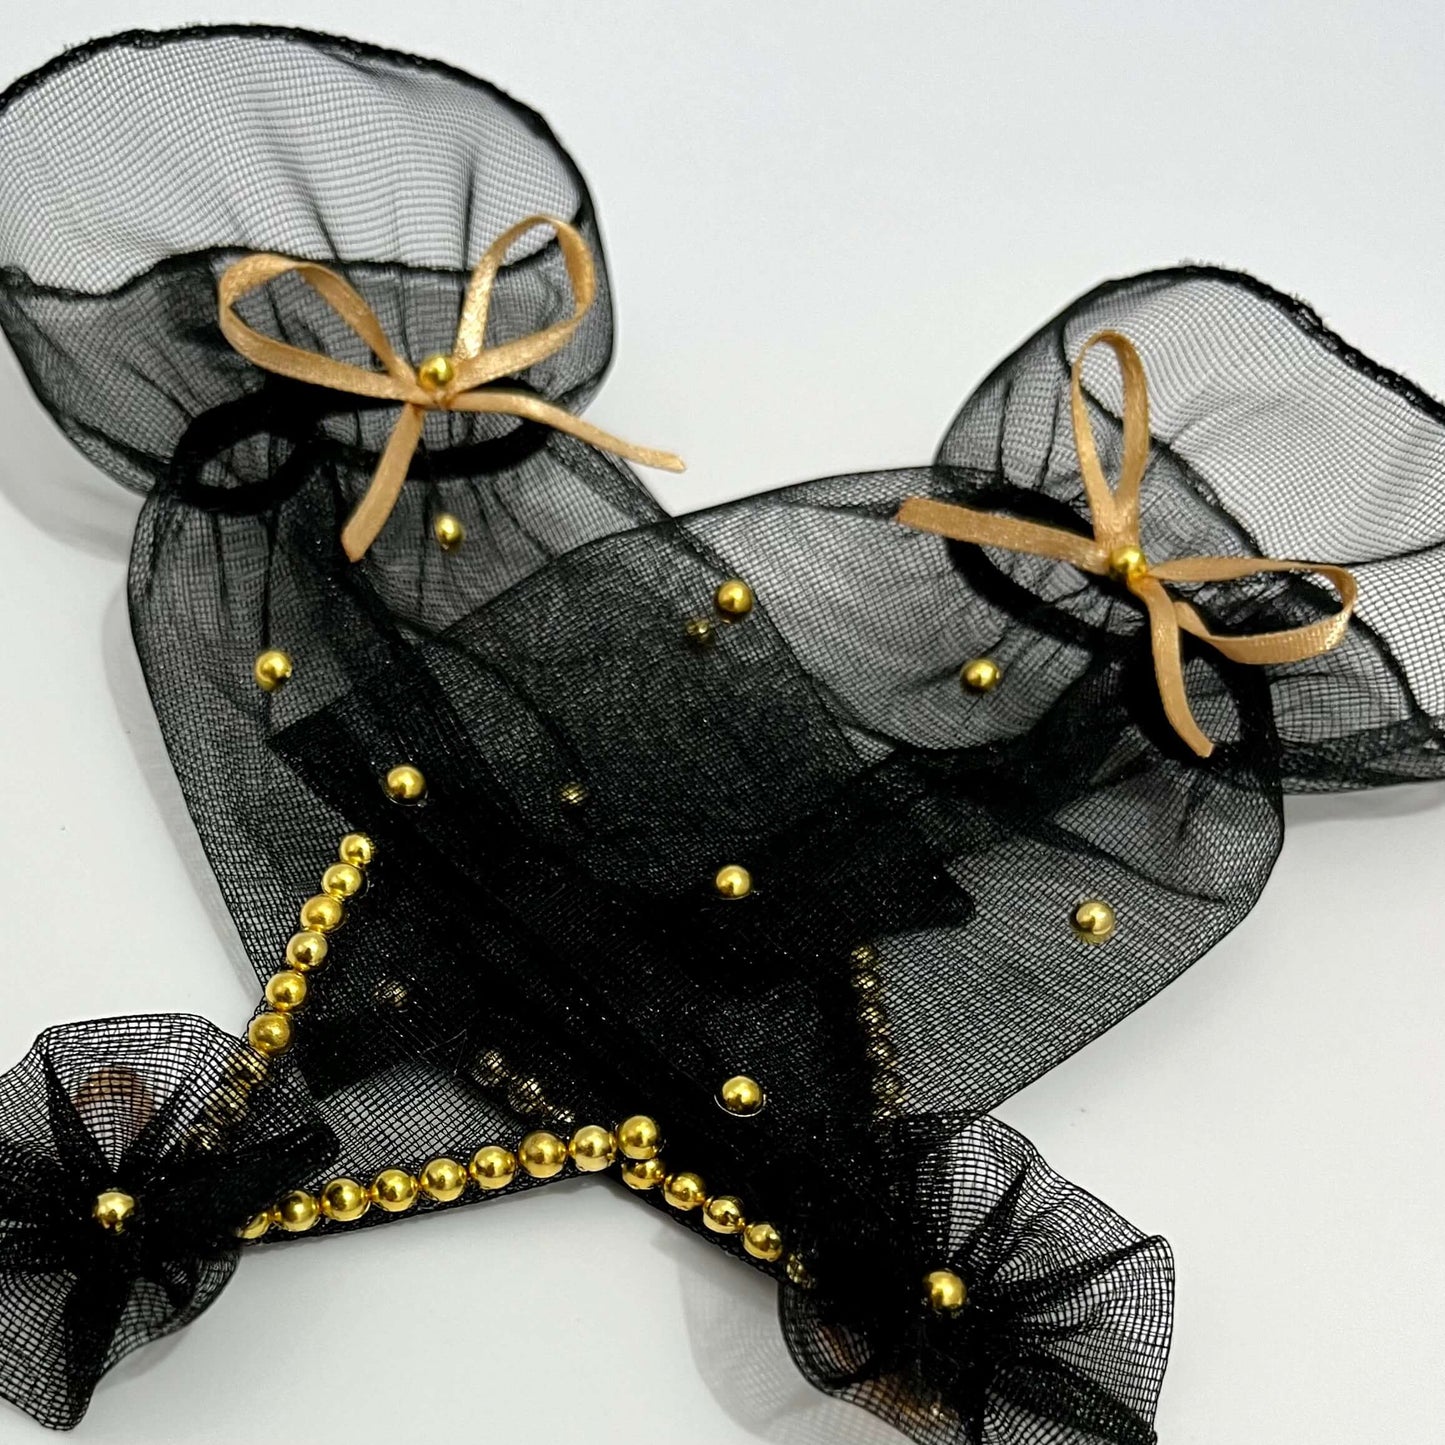 Black Gloves with Golden Pearls | Birthday Exquisite Accessories